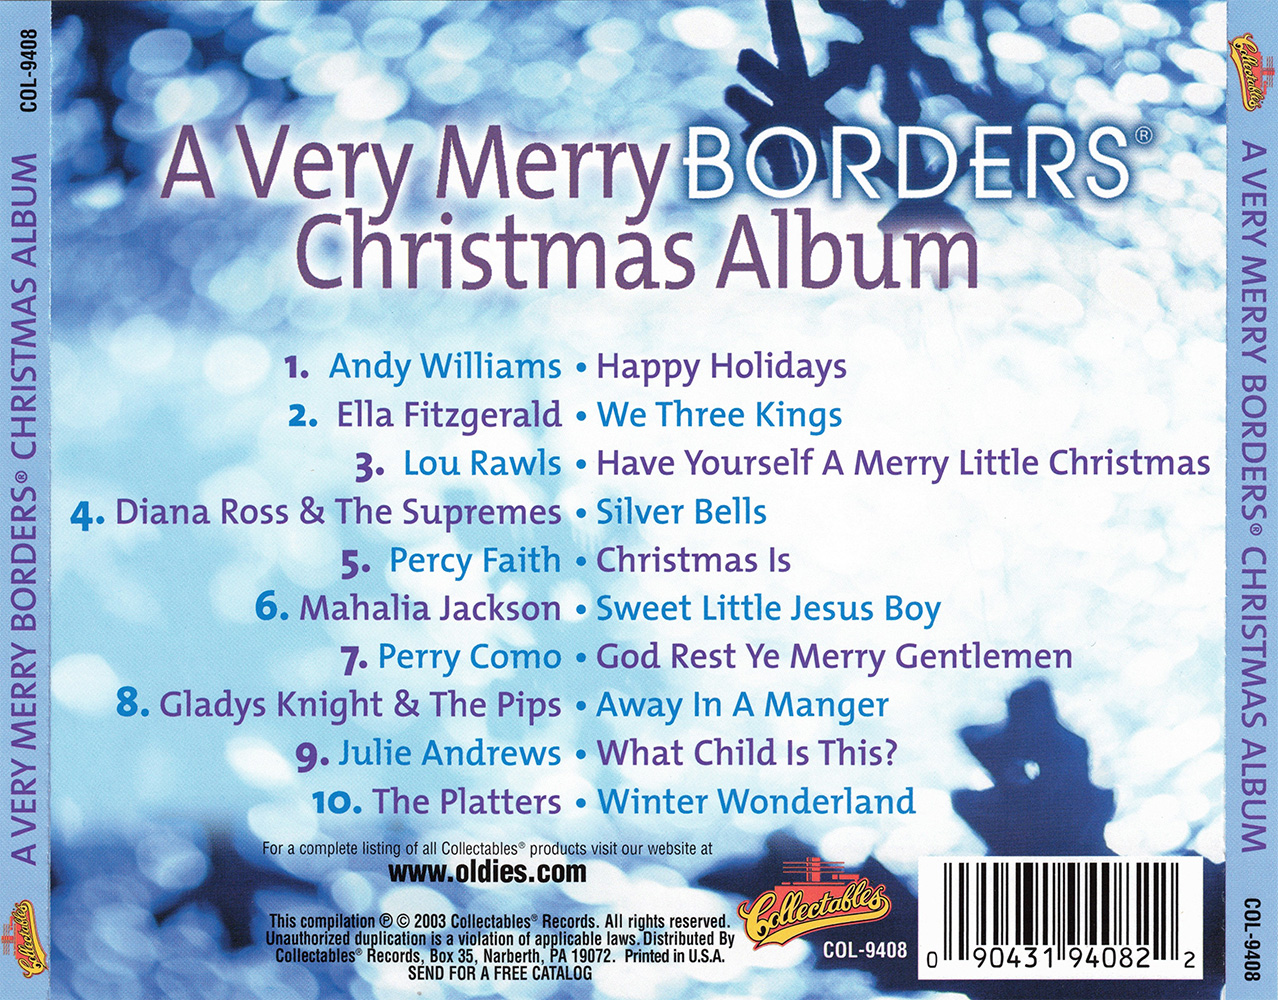 A Very Merry Borders Christmas Album